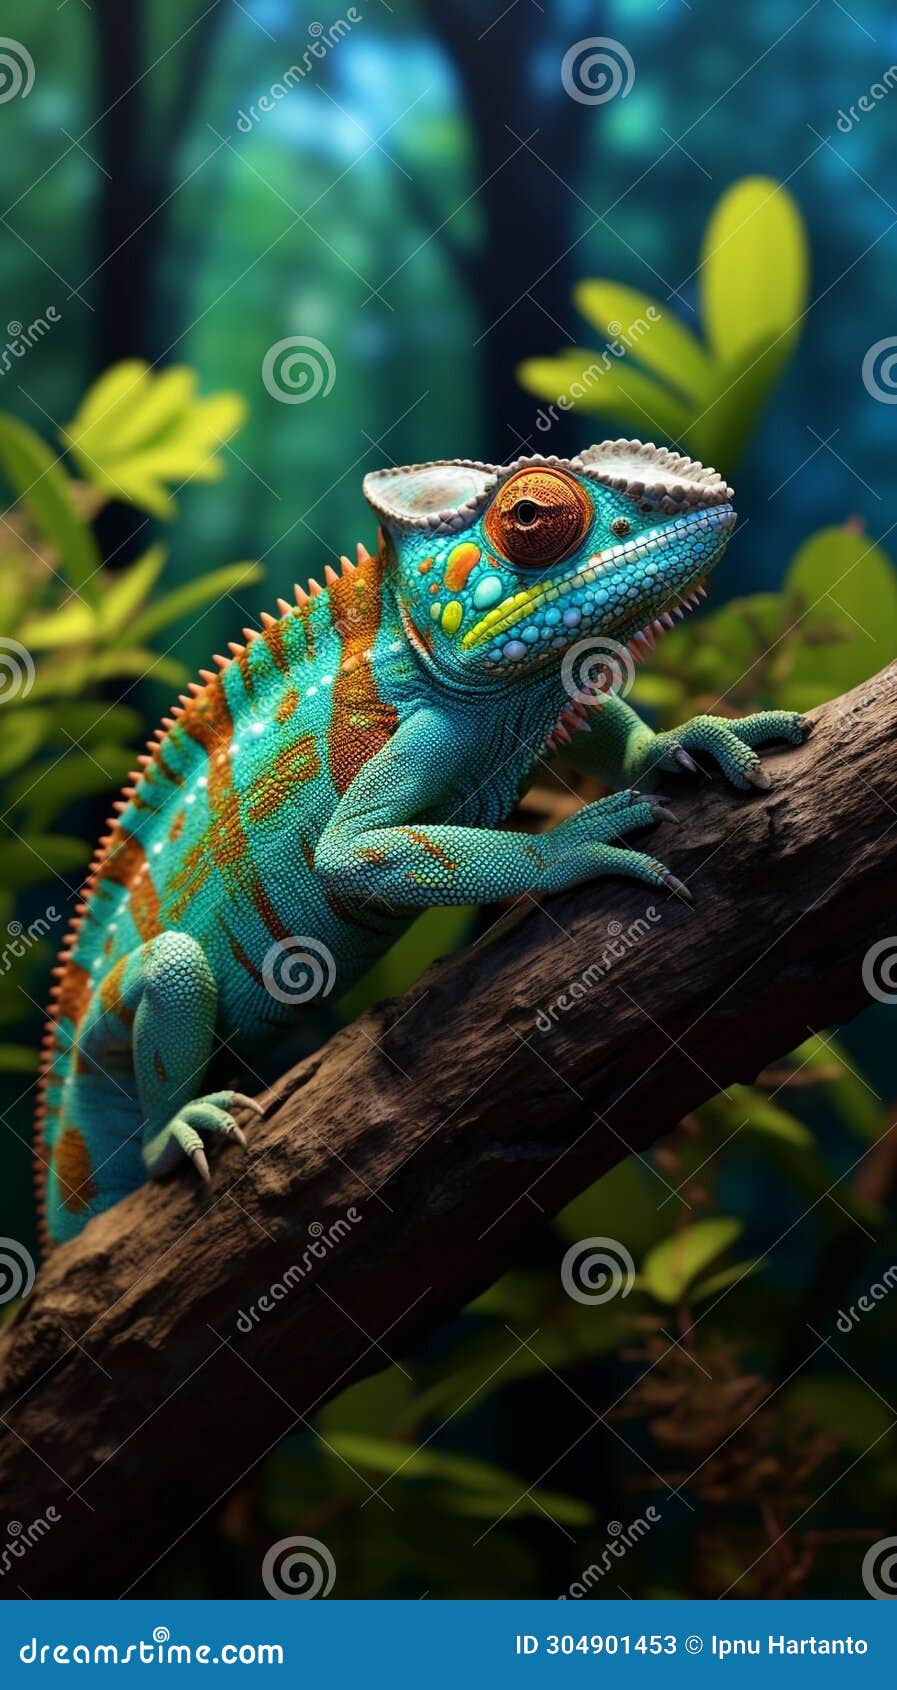 chameleon reverie, arboreal maestro in the foliage